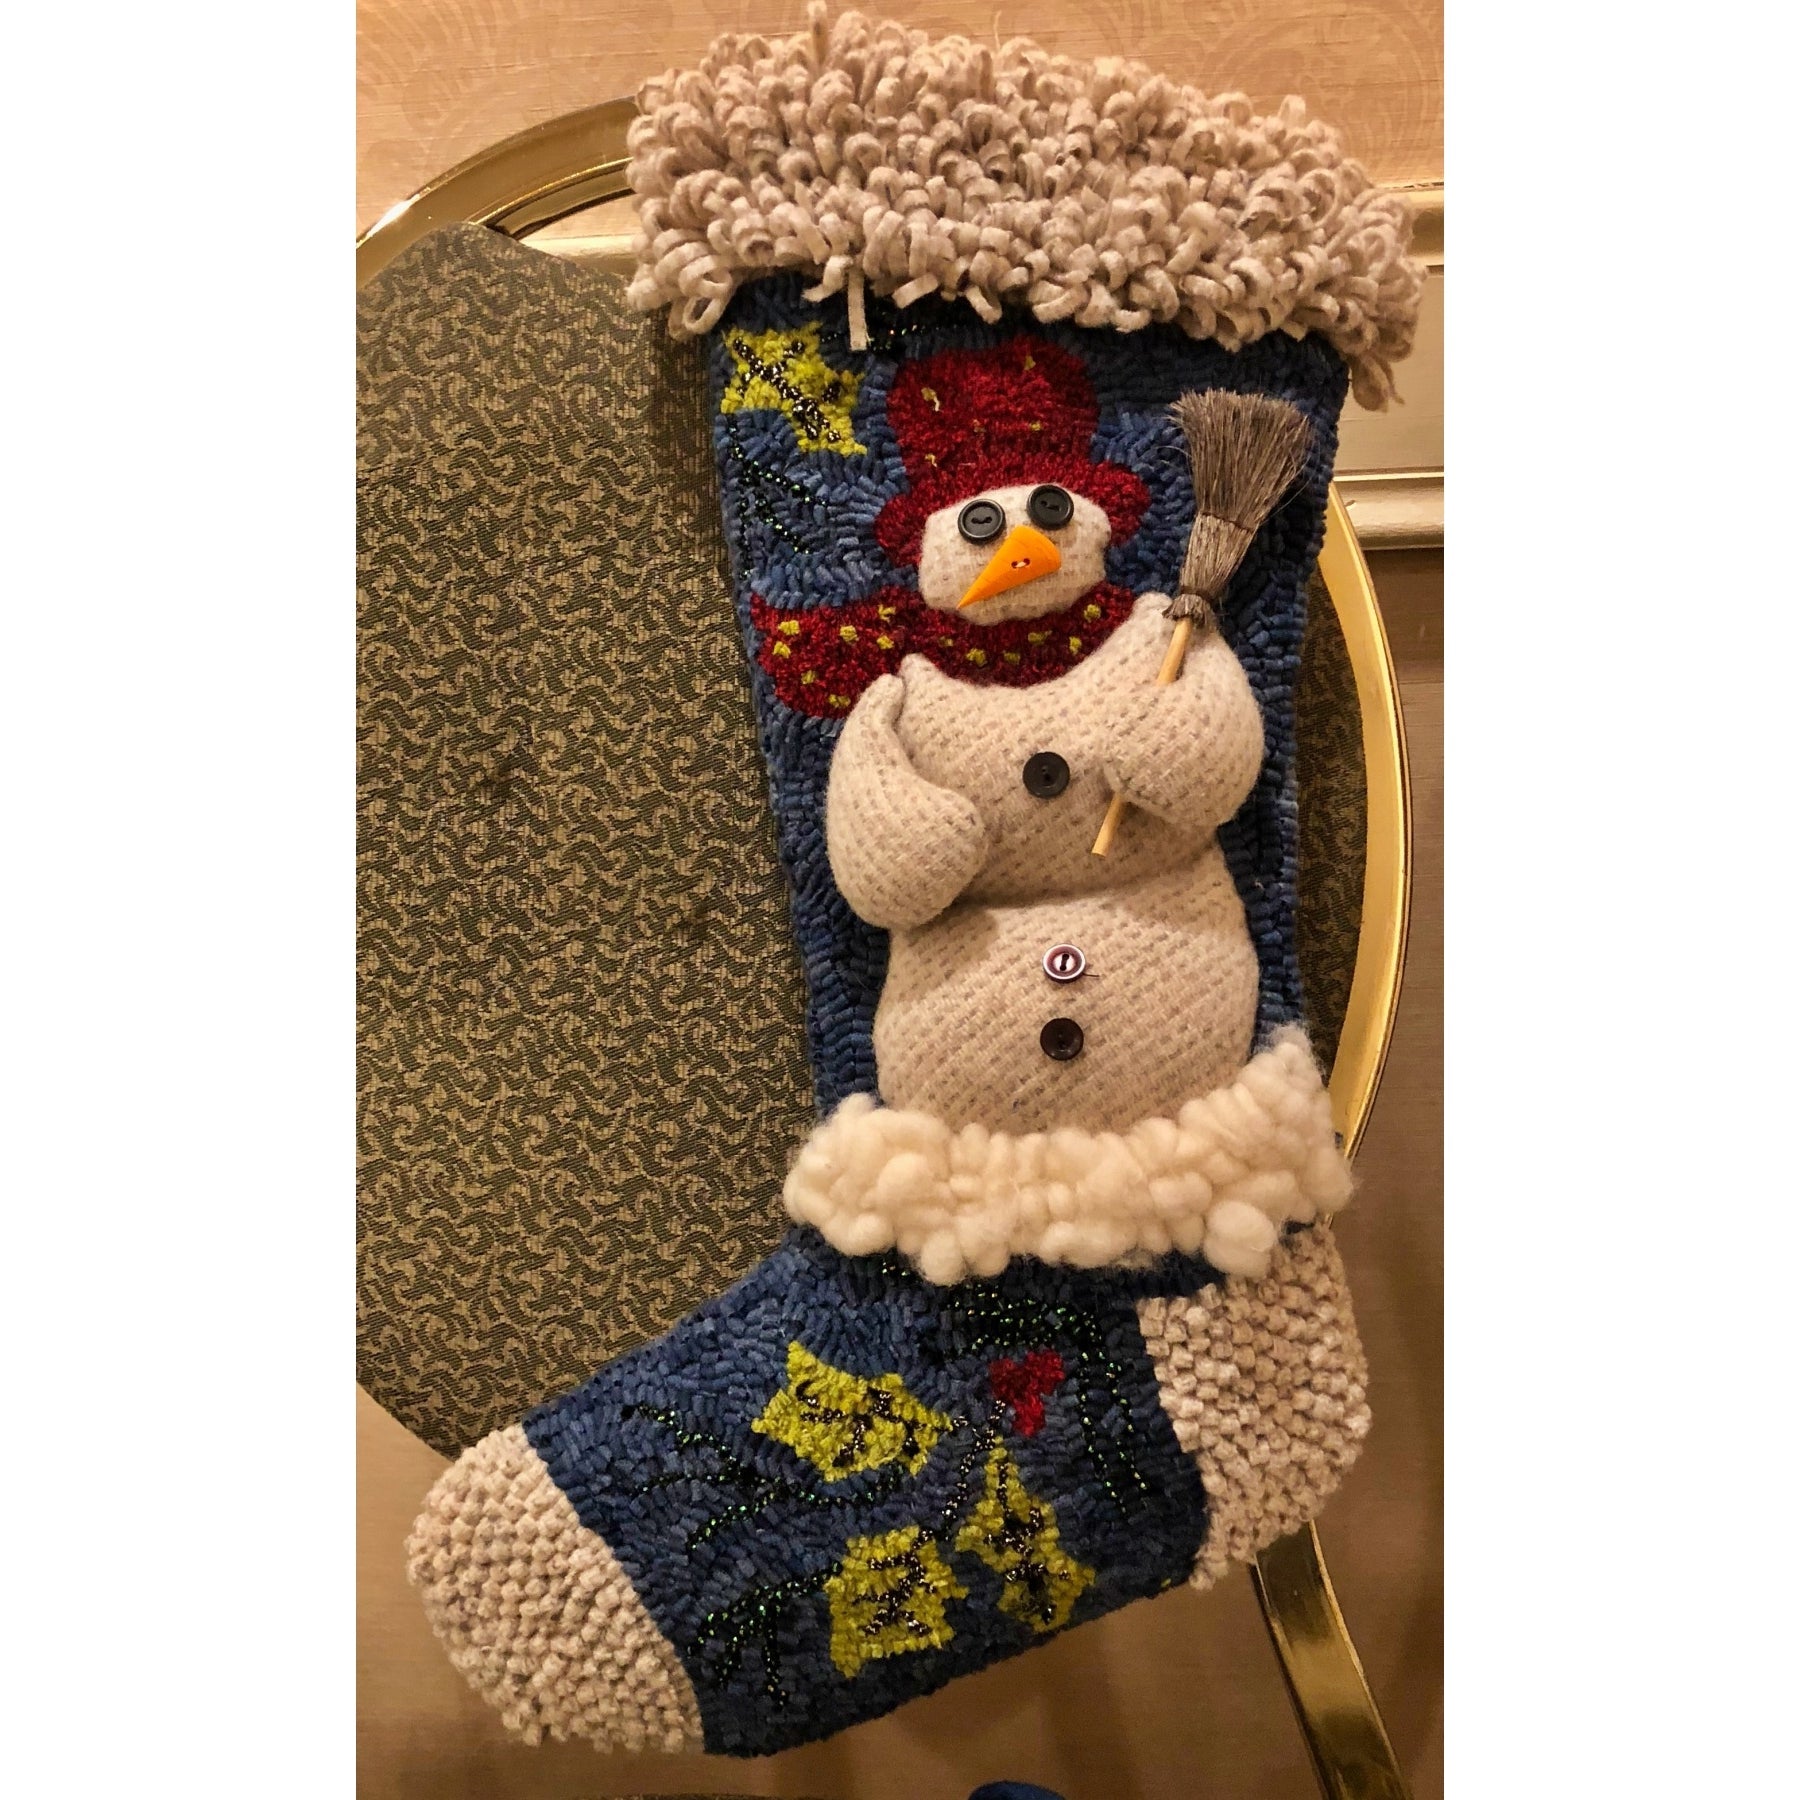 Snowman Stocking, rug hooked by Karen Dunklee